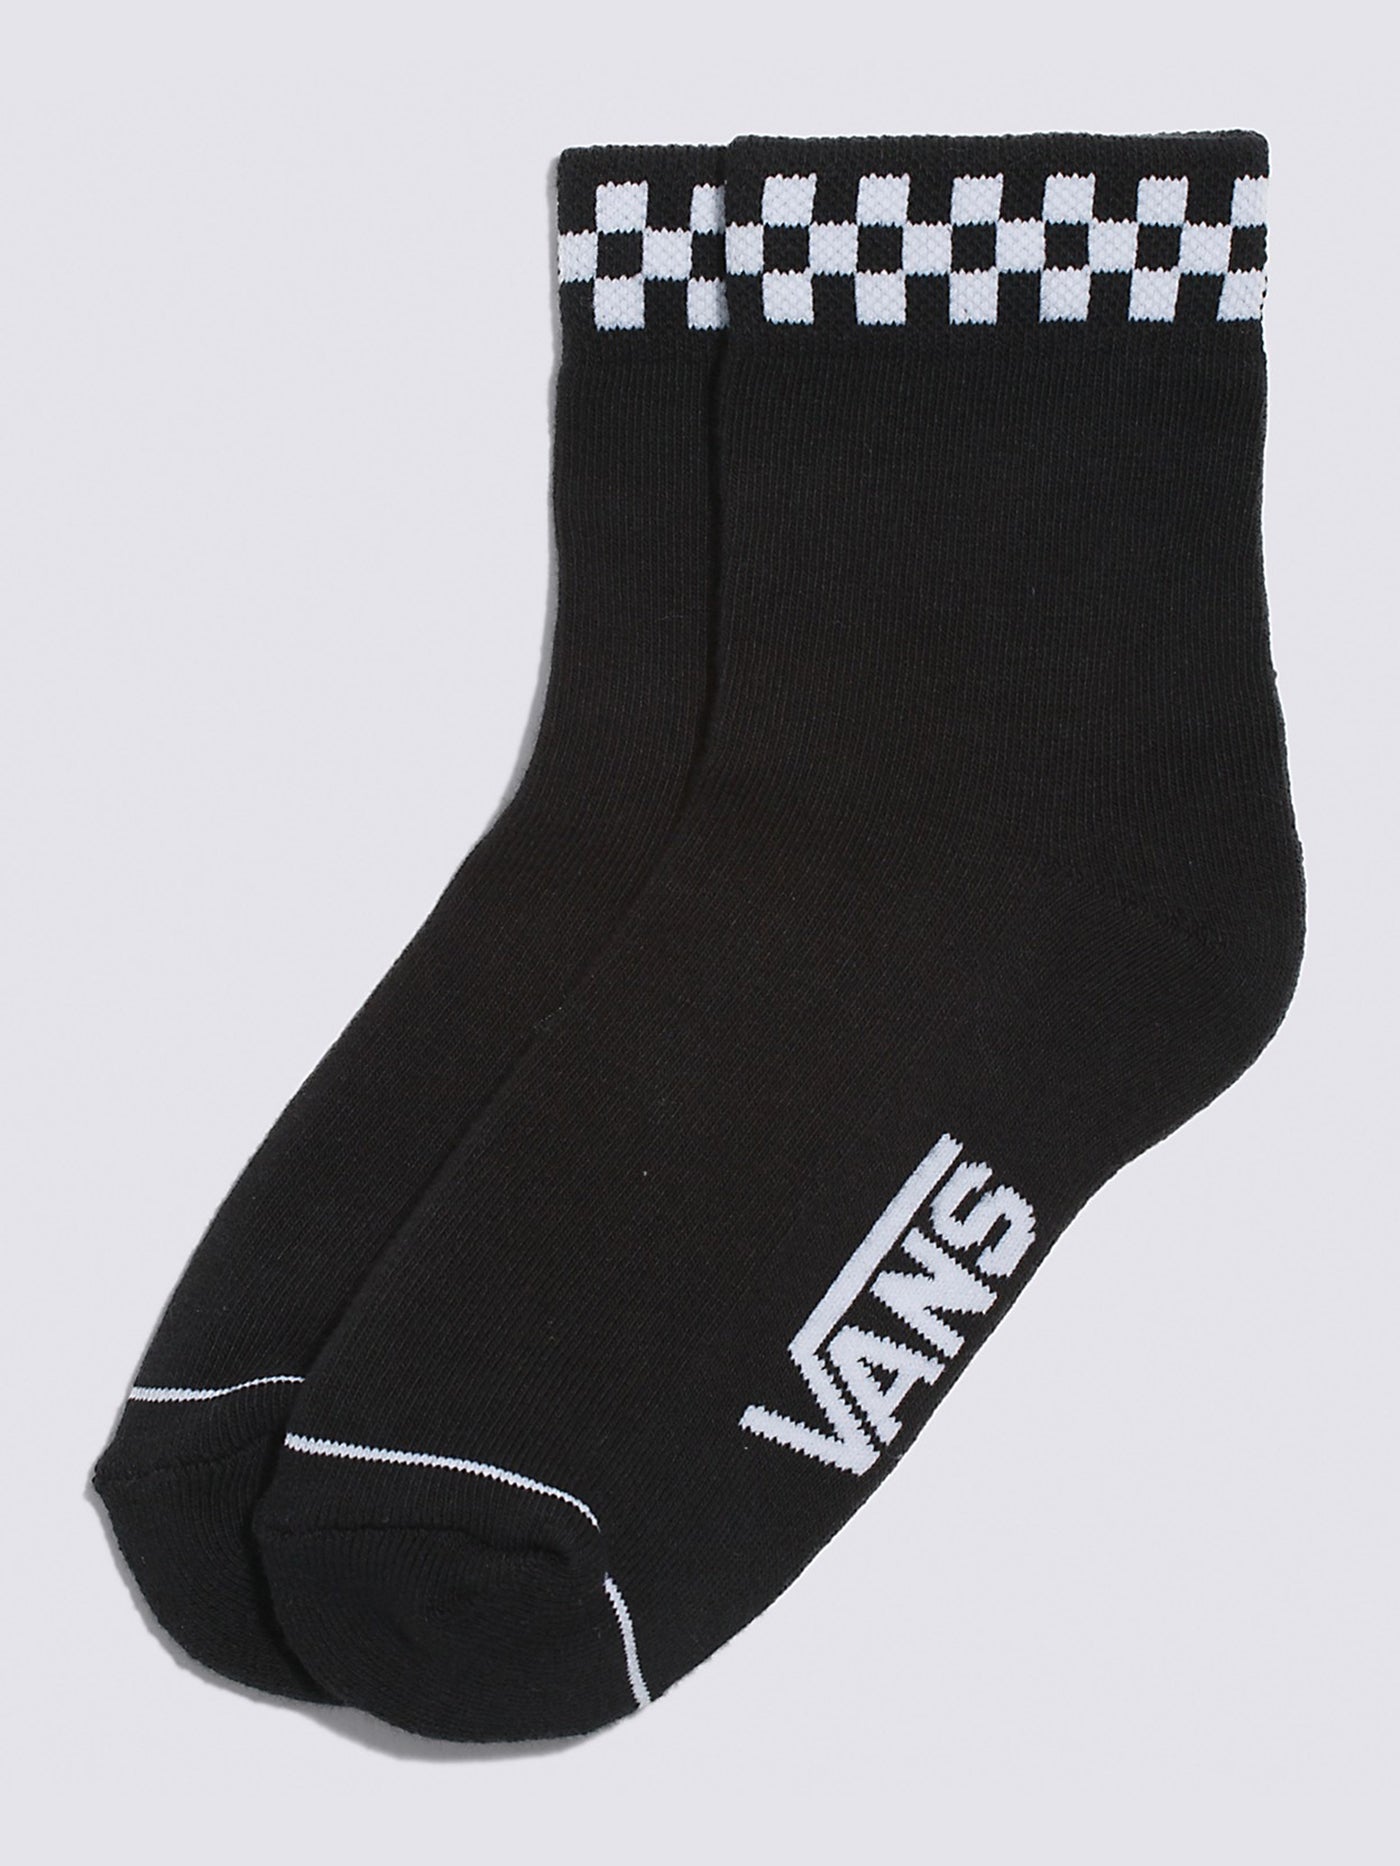 Vans Peek-A-Check Socks